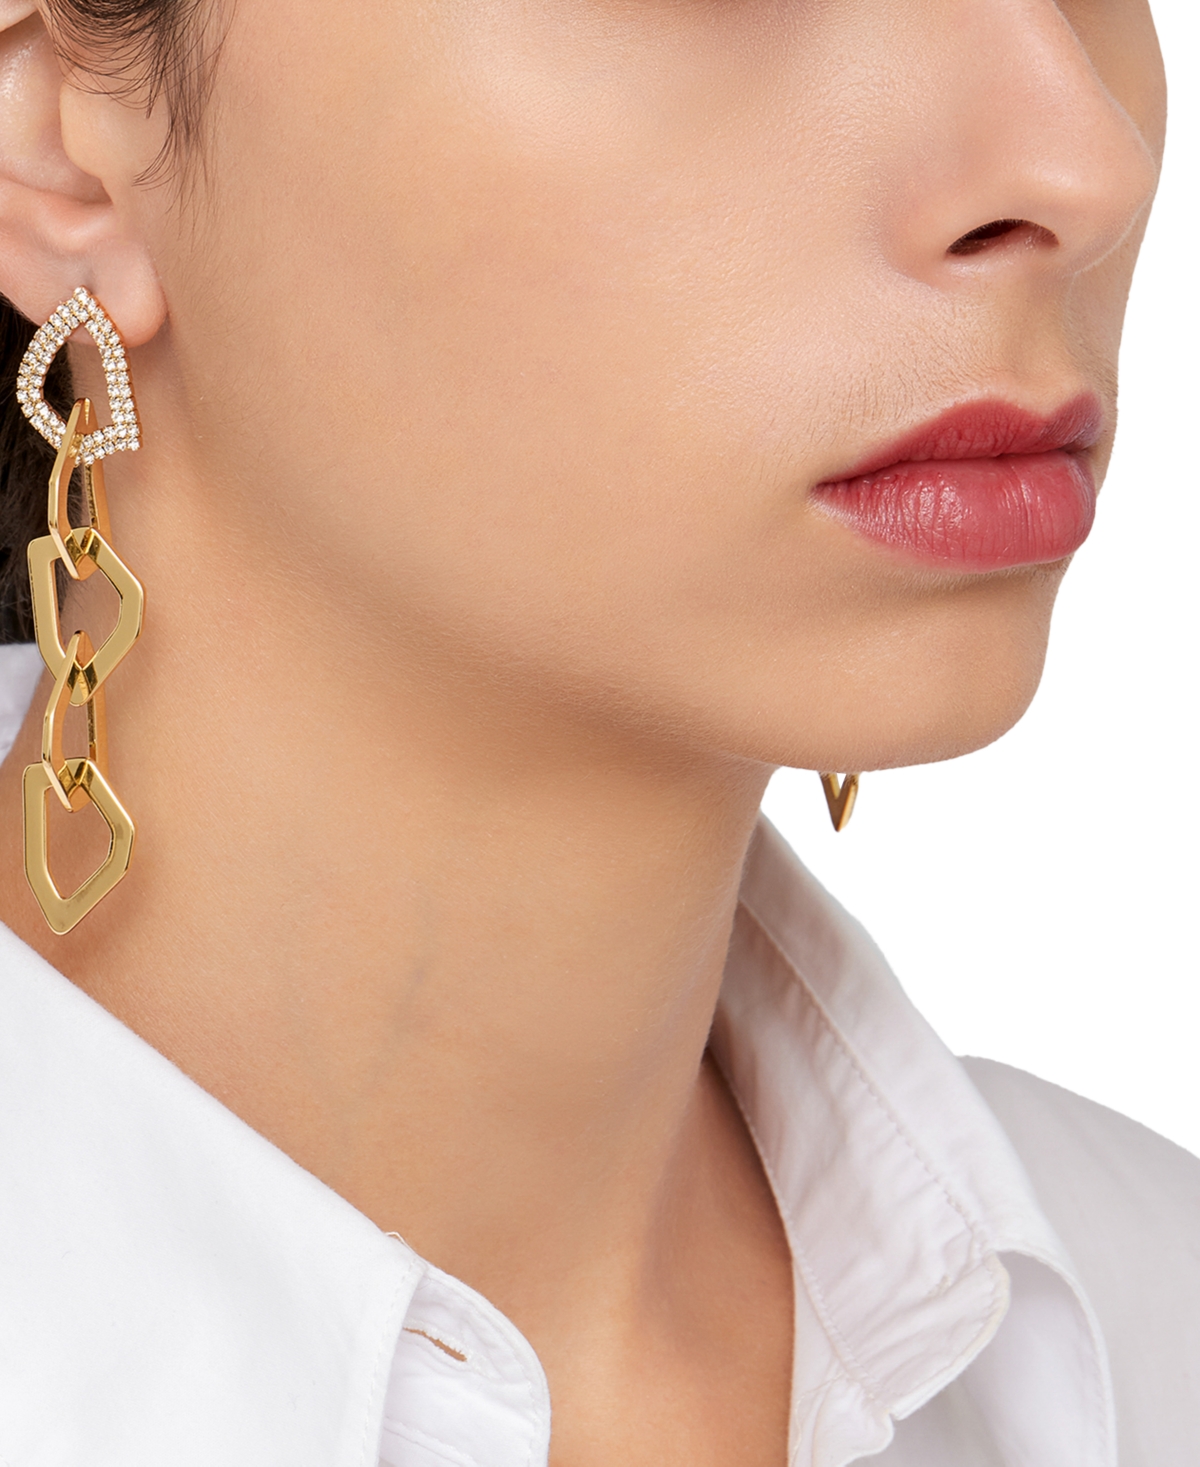 Shop Adornia 14k Gold-plated Organic Link Drop Earrings